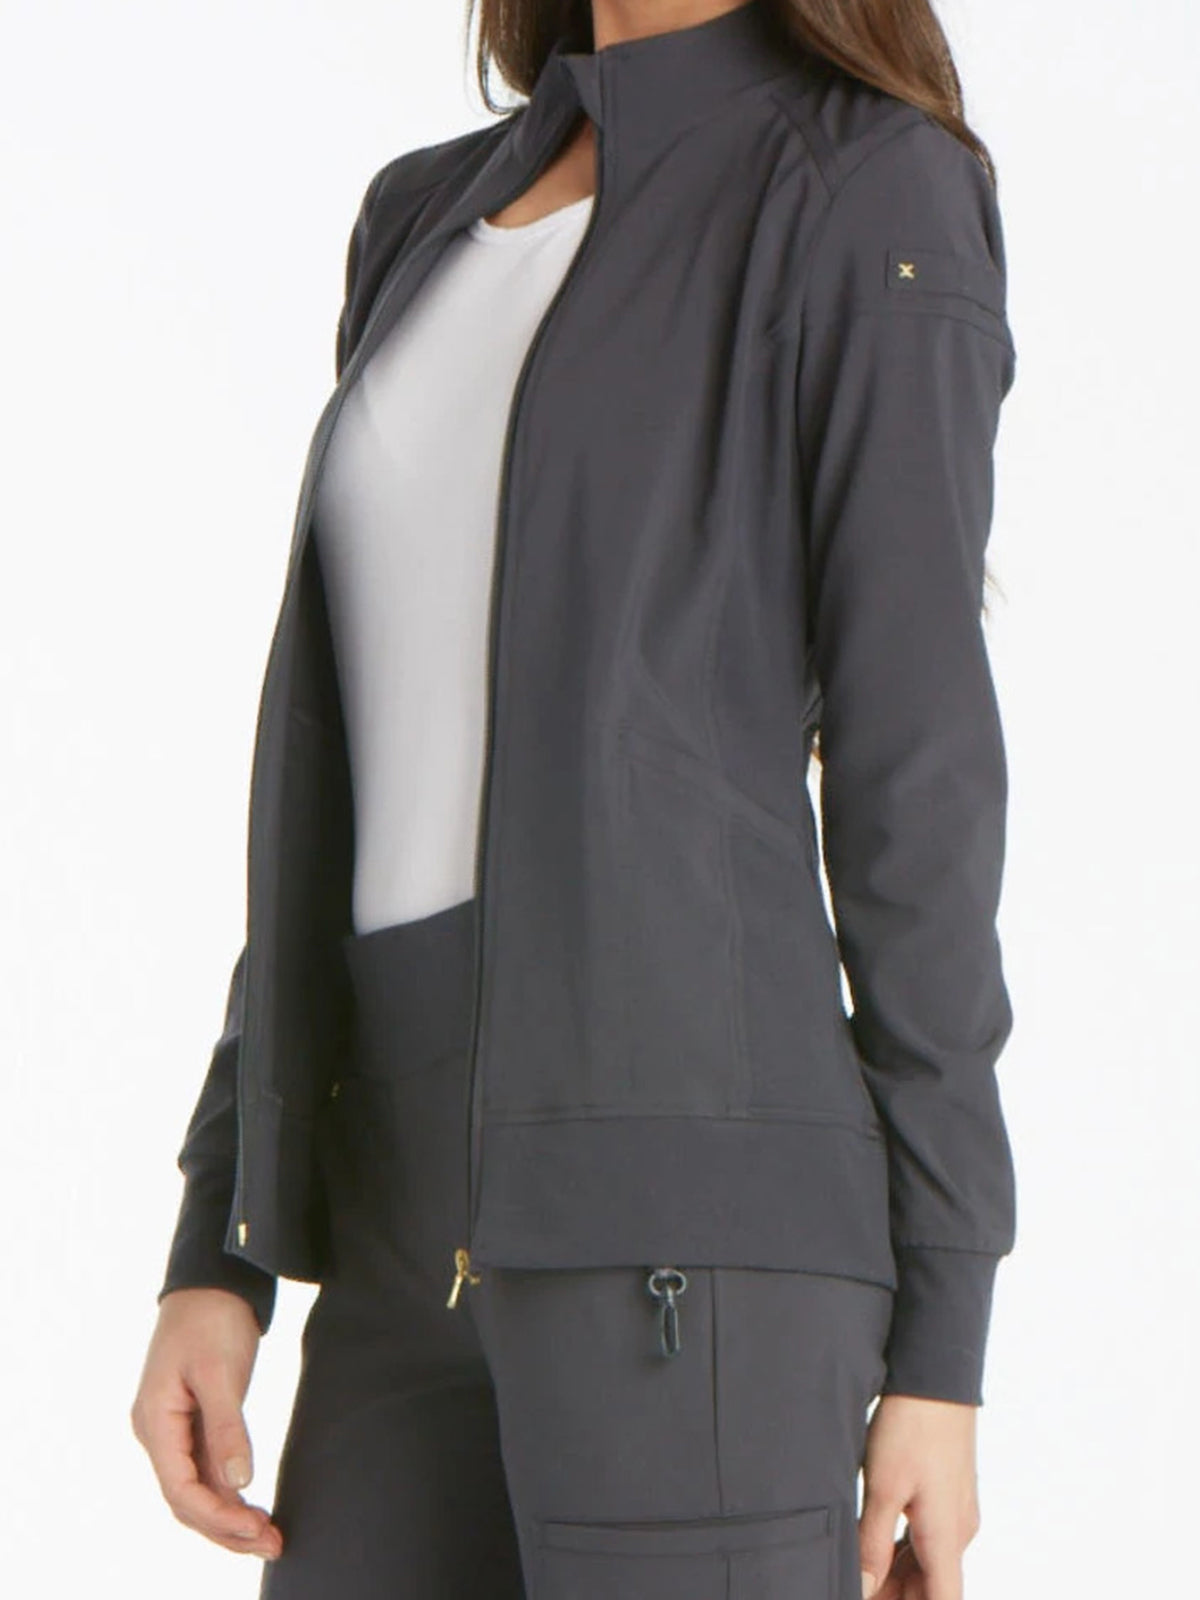 Women's 2 Pocket Zip Front Scrub Jacket